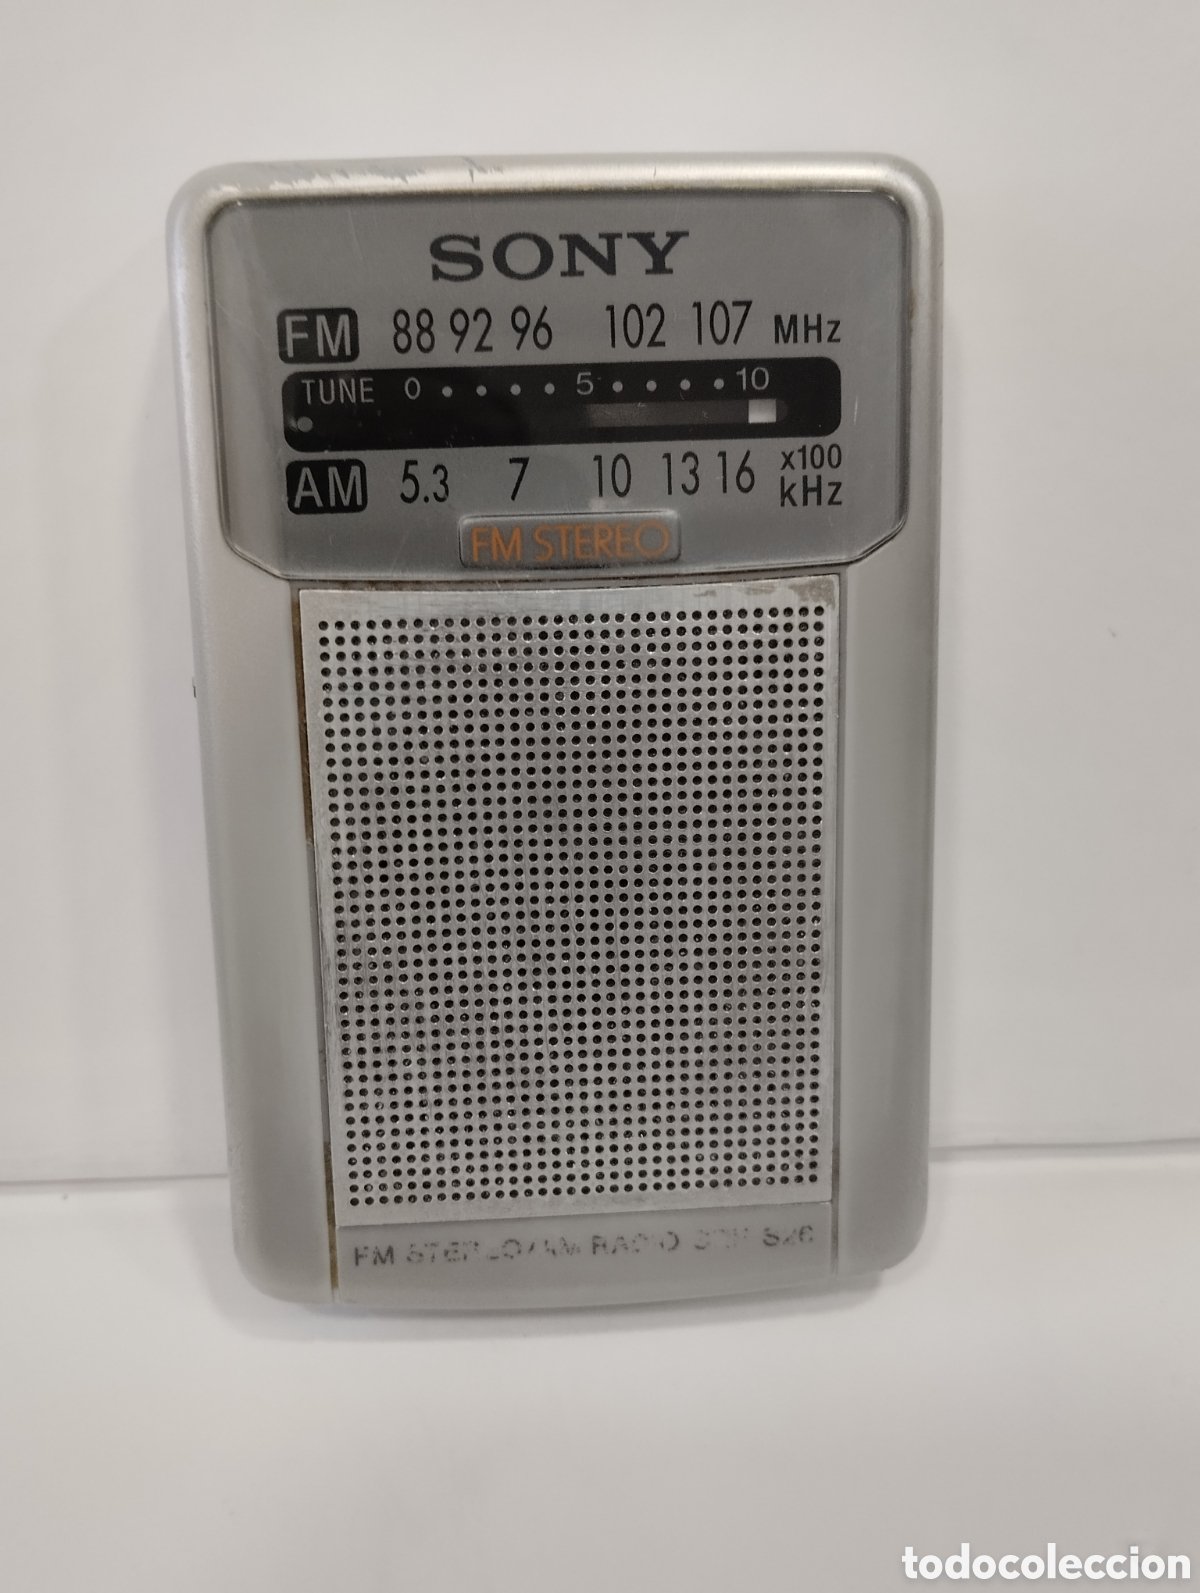 Radio Sony SRF-S26 |Portátil, color plata